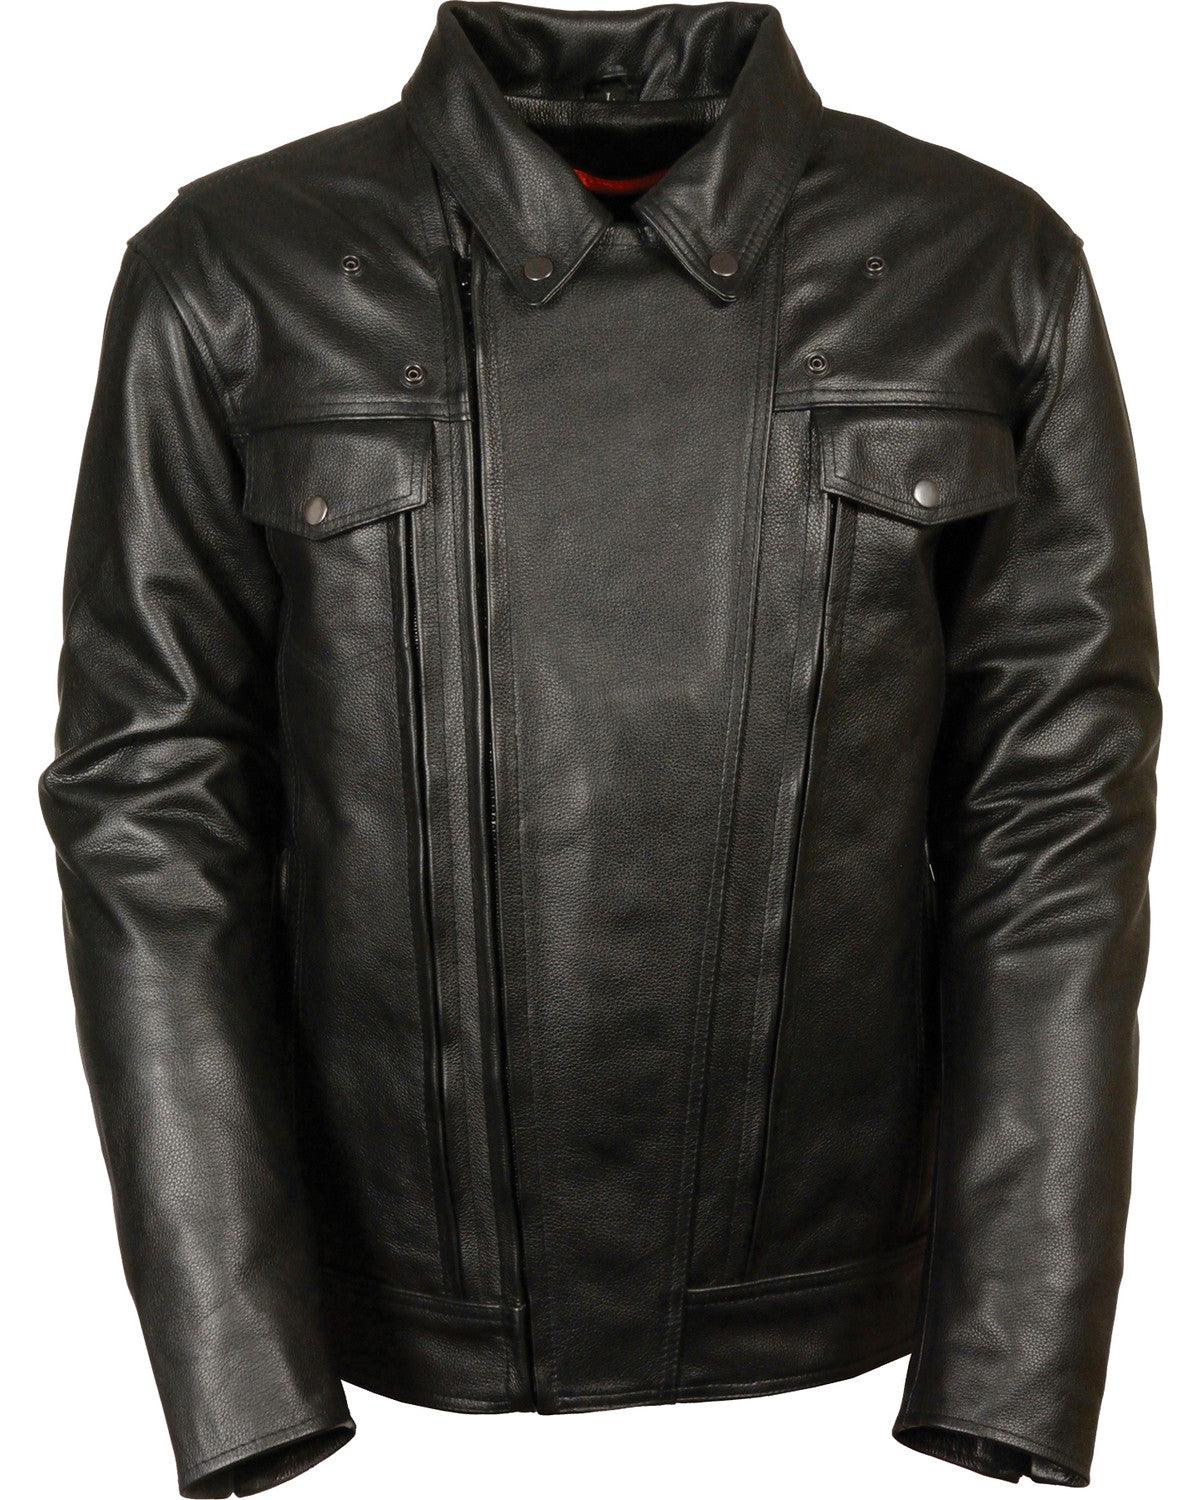 Men's High End Utility Pocket Vented Cruiser Jacket - Leather Loom